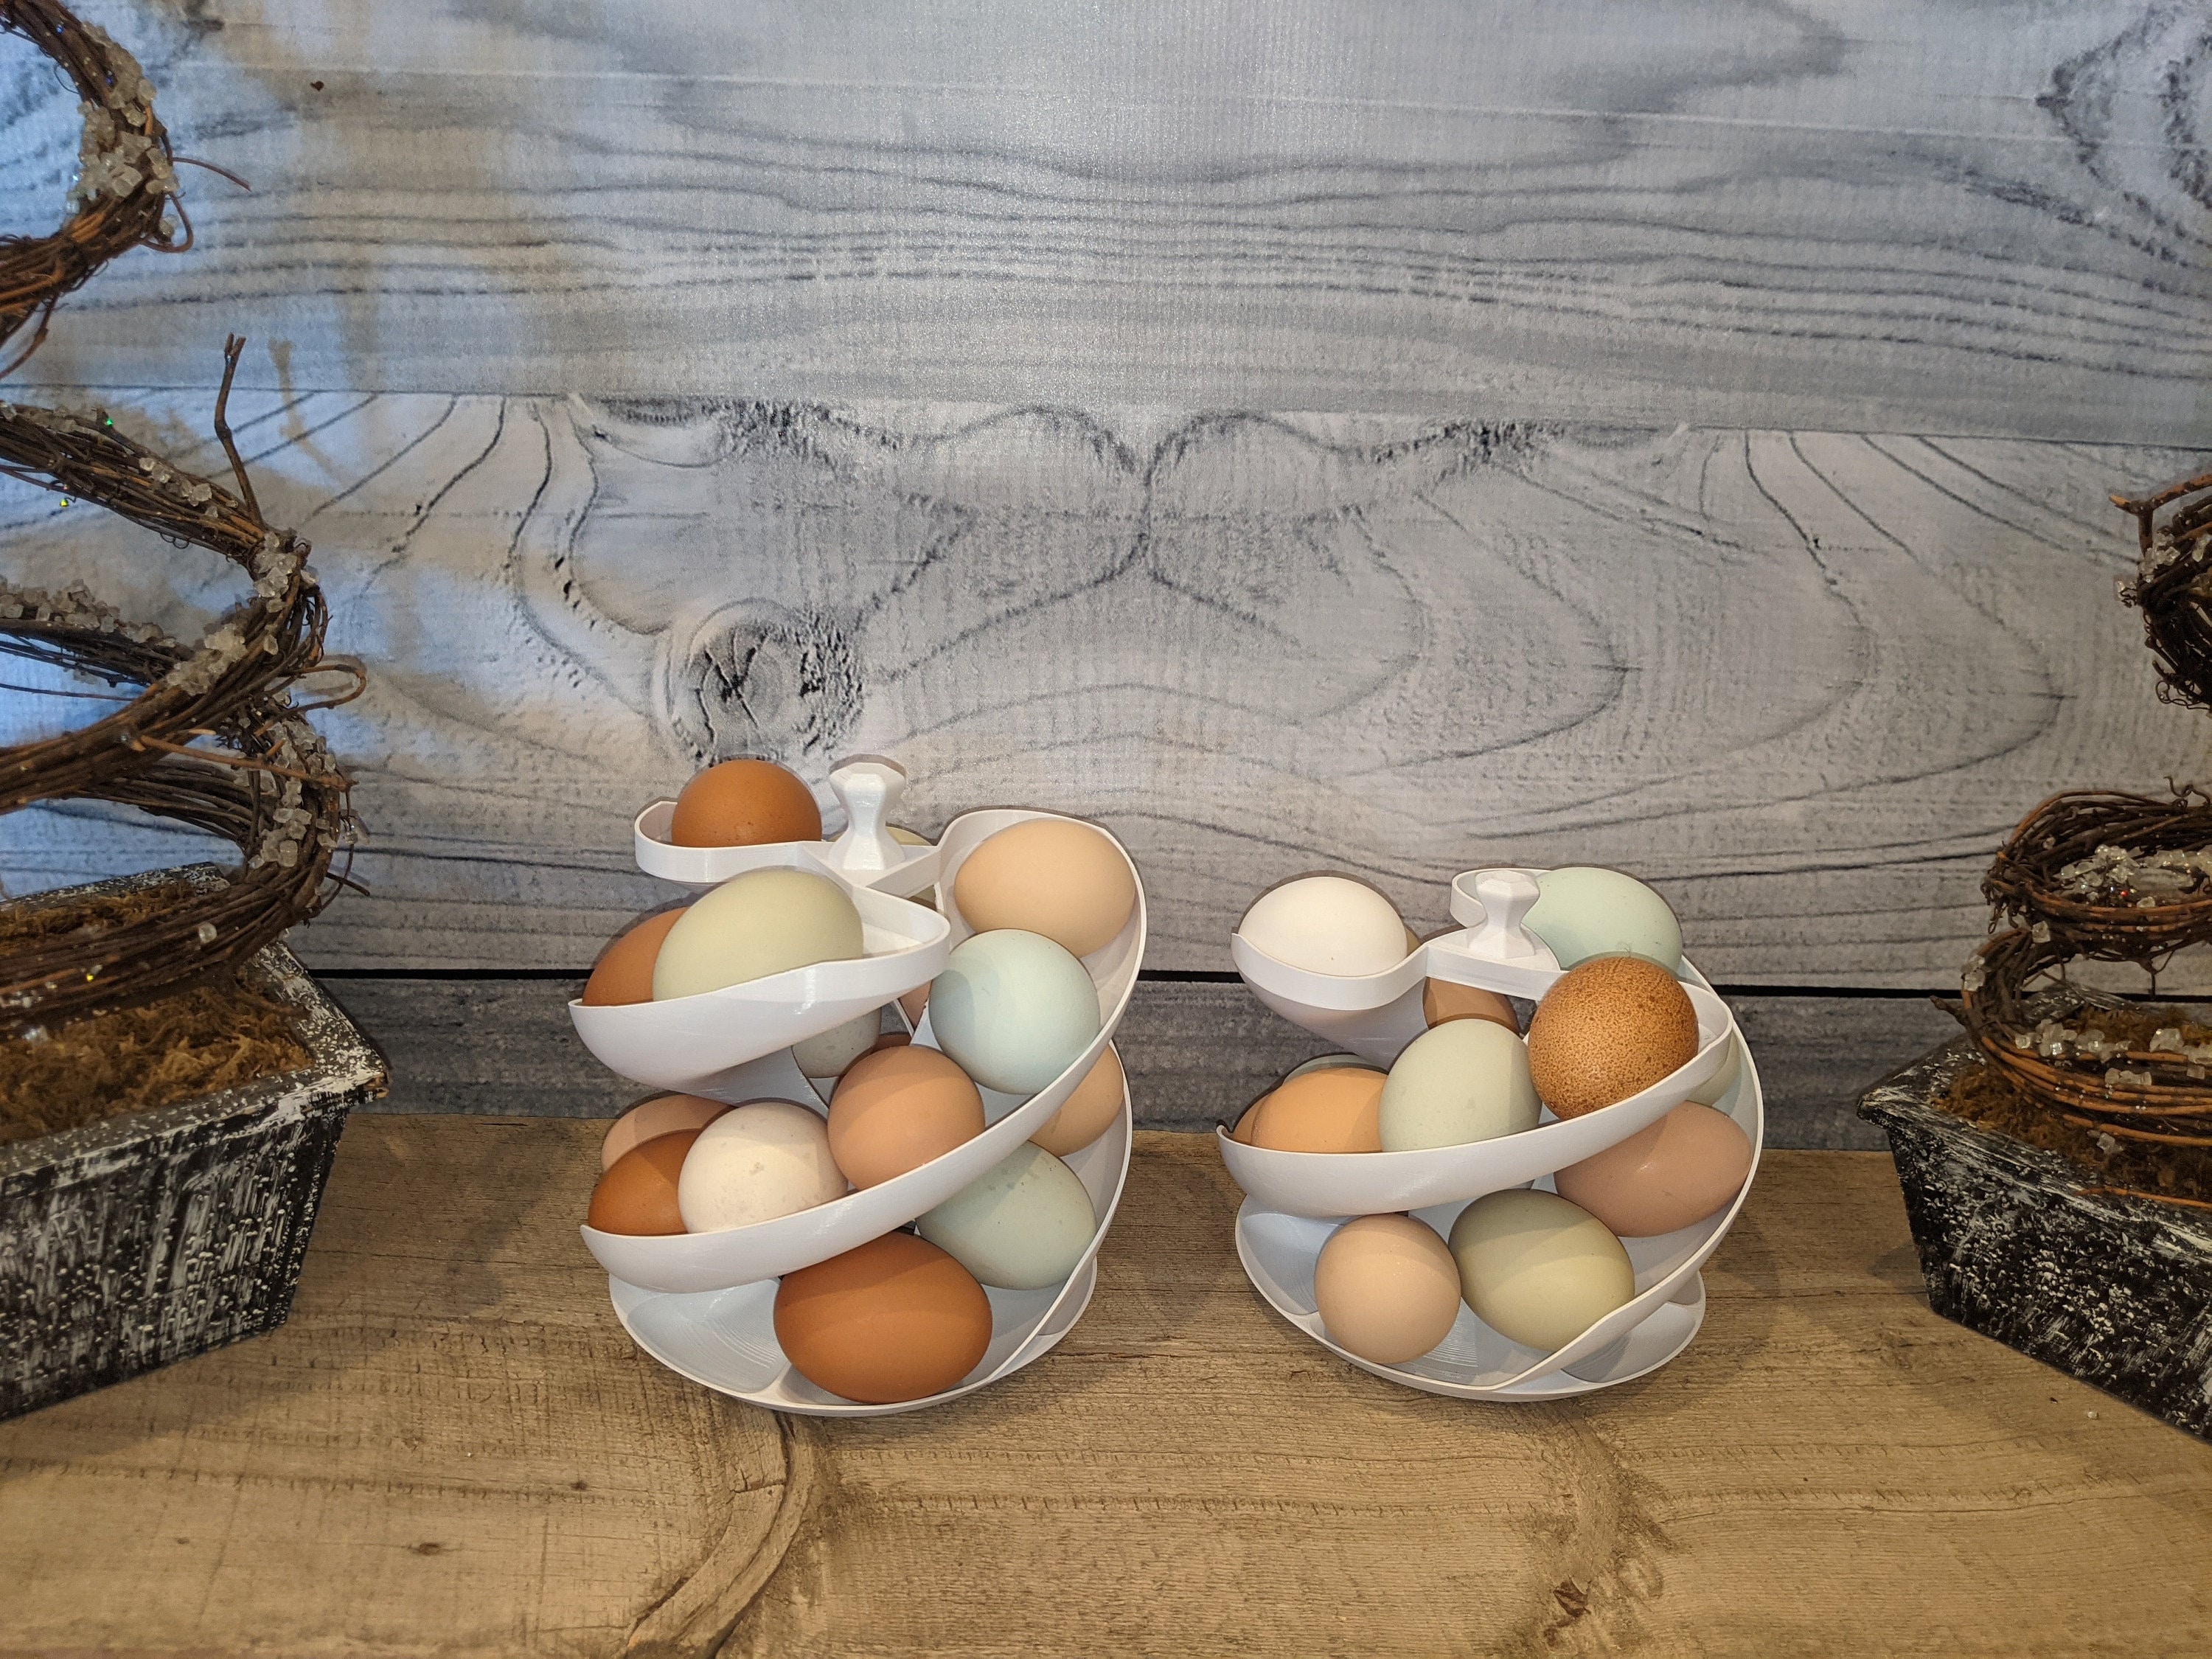  Fresh Egg Holder Countertop, Egg Skelter, Spiral Egg Holder  with Storage Basket, Chicken Egg Holder, Large Capacity Egg Storage for  Kitchen, Holds Up to 3 Dozen Eggs : Home & Kitchen